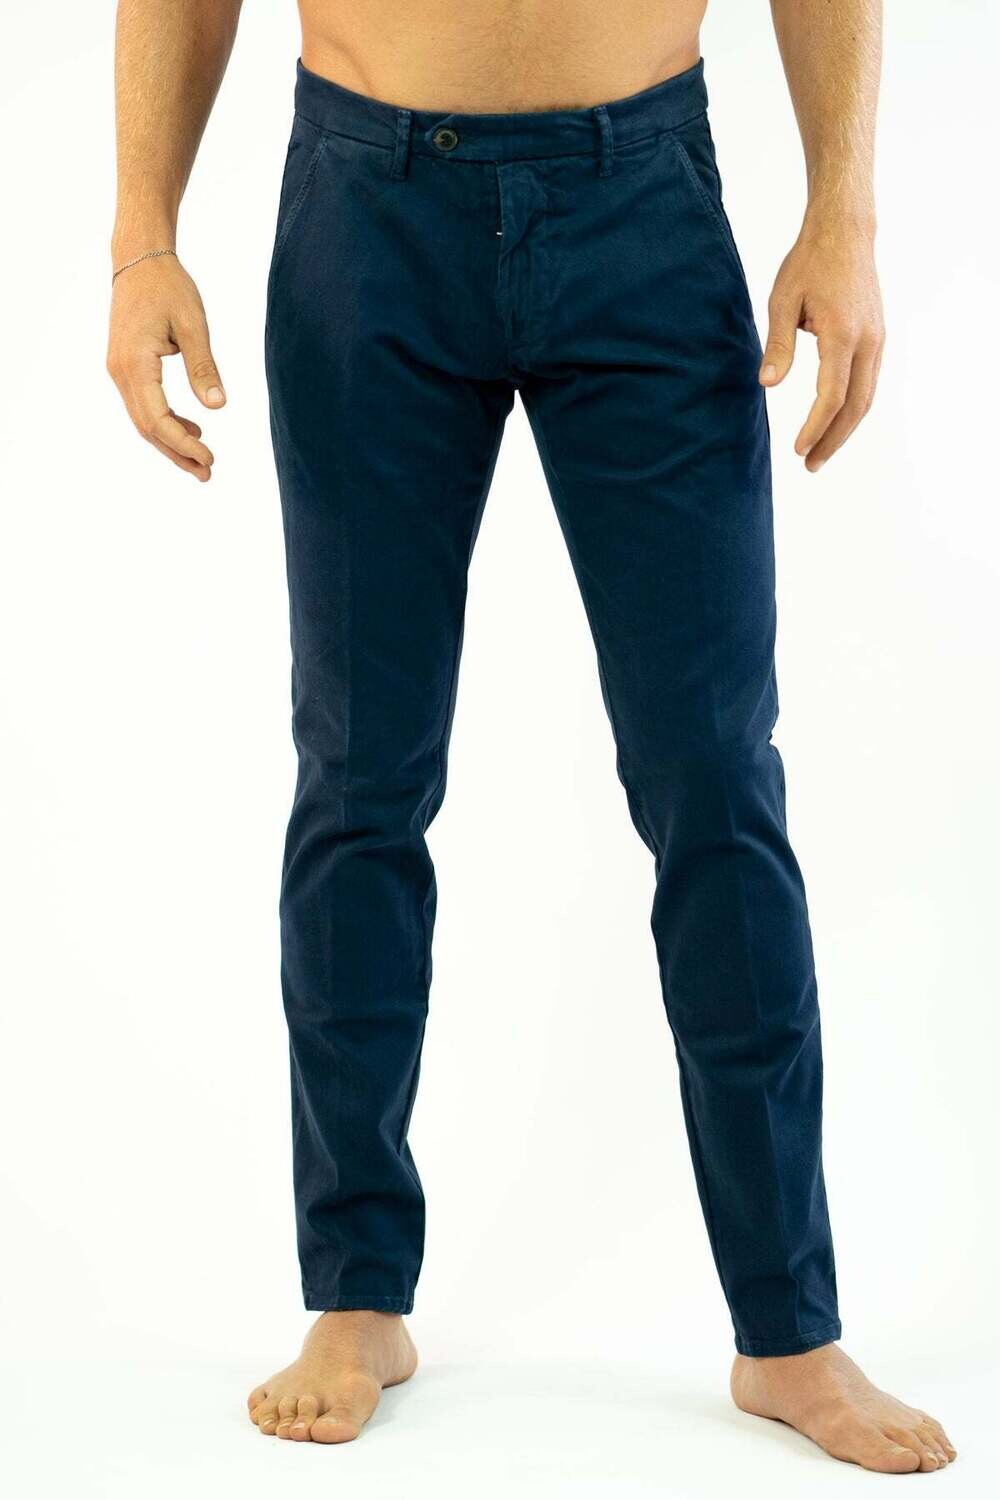 Pantaloni chino Uomo Blu Petrol Scuro Tasche america Gabardina cotone invernale Pantalone Roy Roger's New Rolf Winter Navy Washed Slim Fit art. RRU013C8700112 638, Misura: 32 (IT 46)